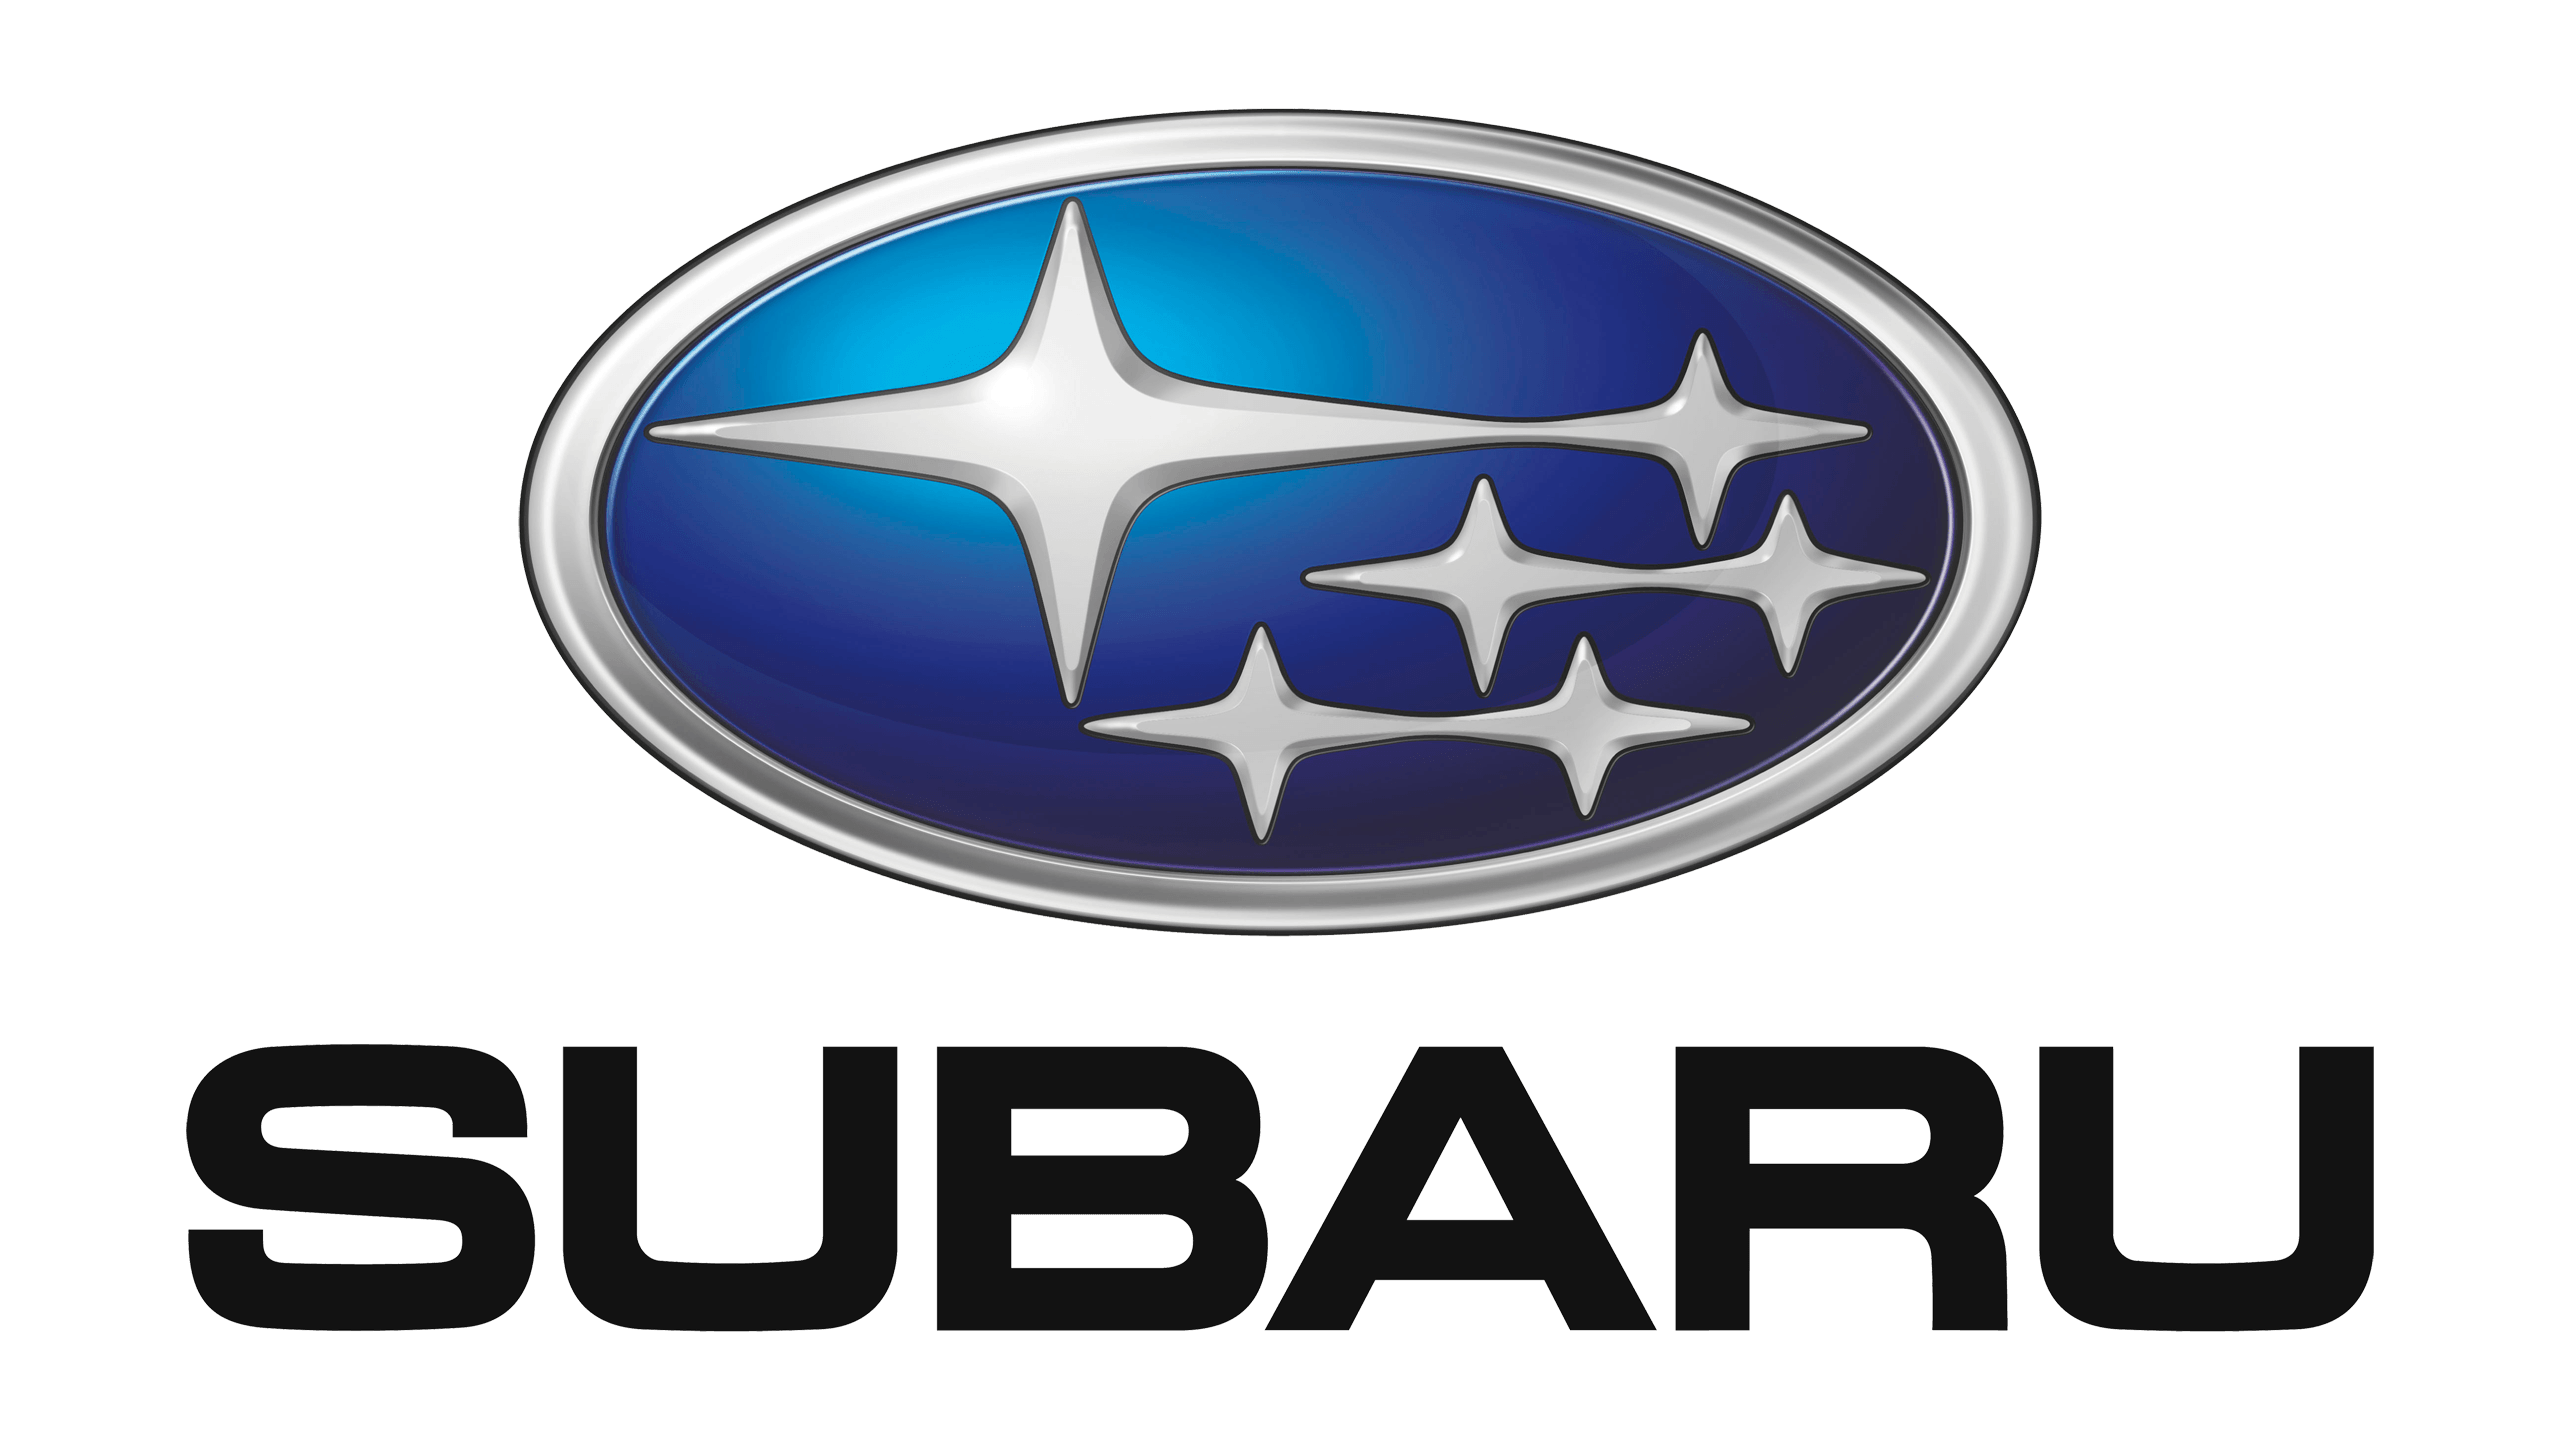 2018 Subaru Logo - Subaru Logo, HD Png, Meaning, Information | Carlogos.org